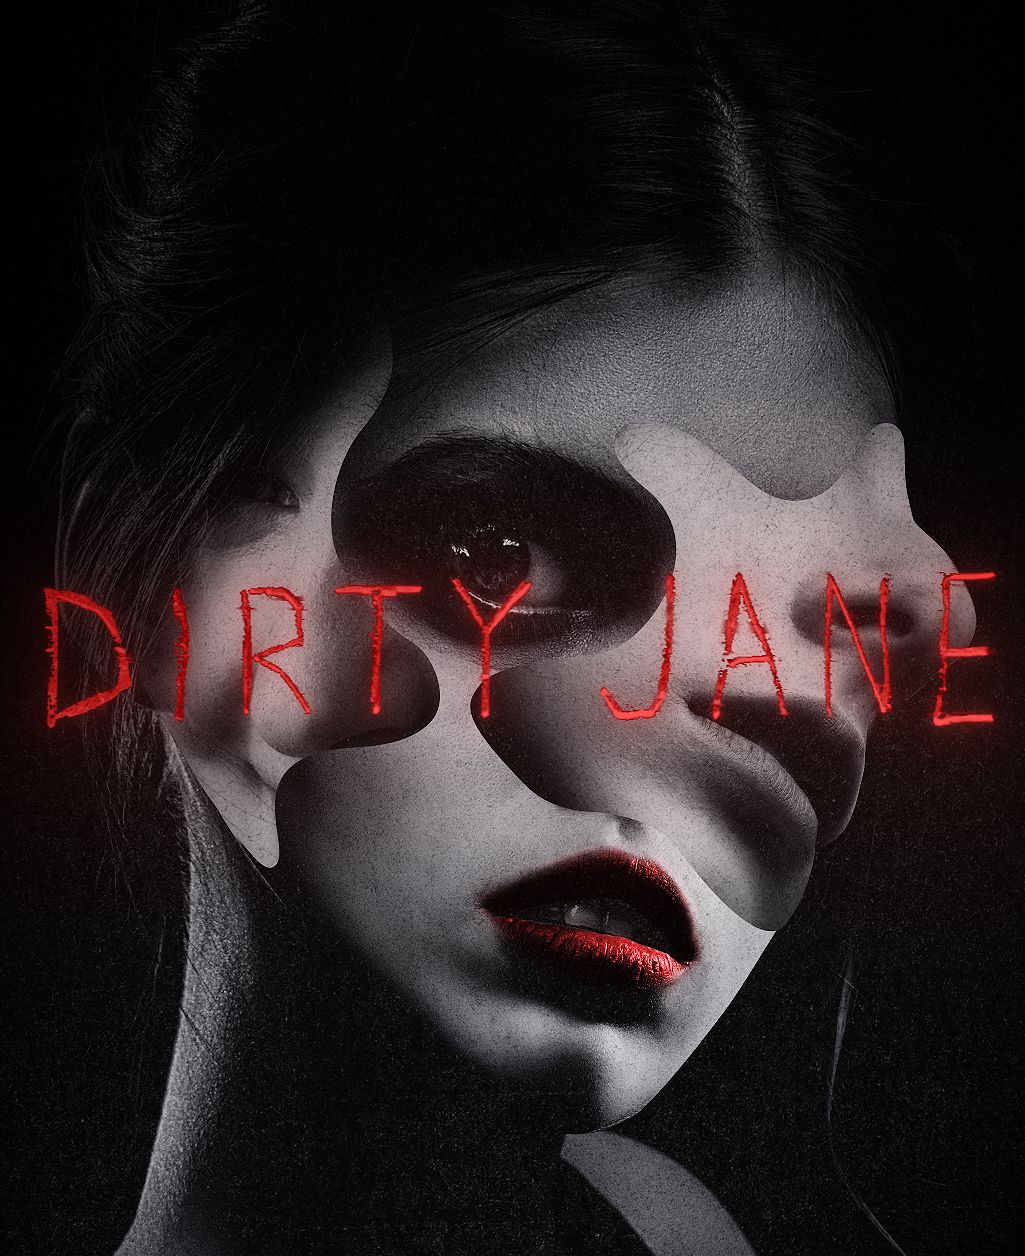 Dirty Jane